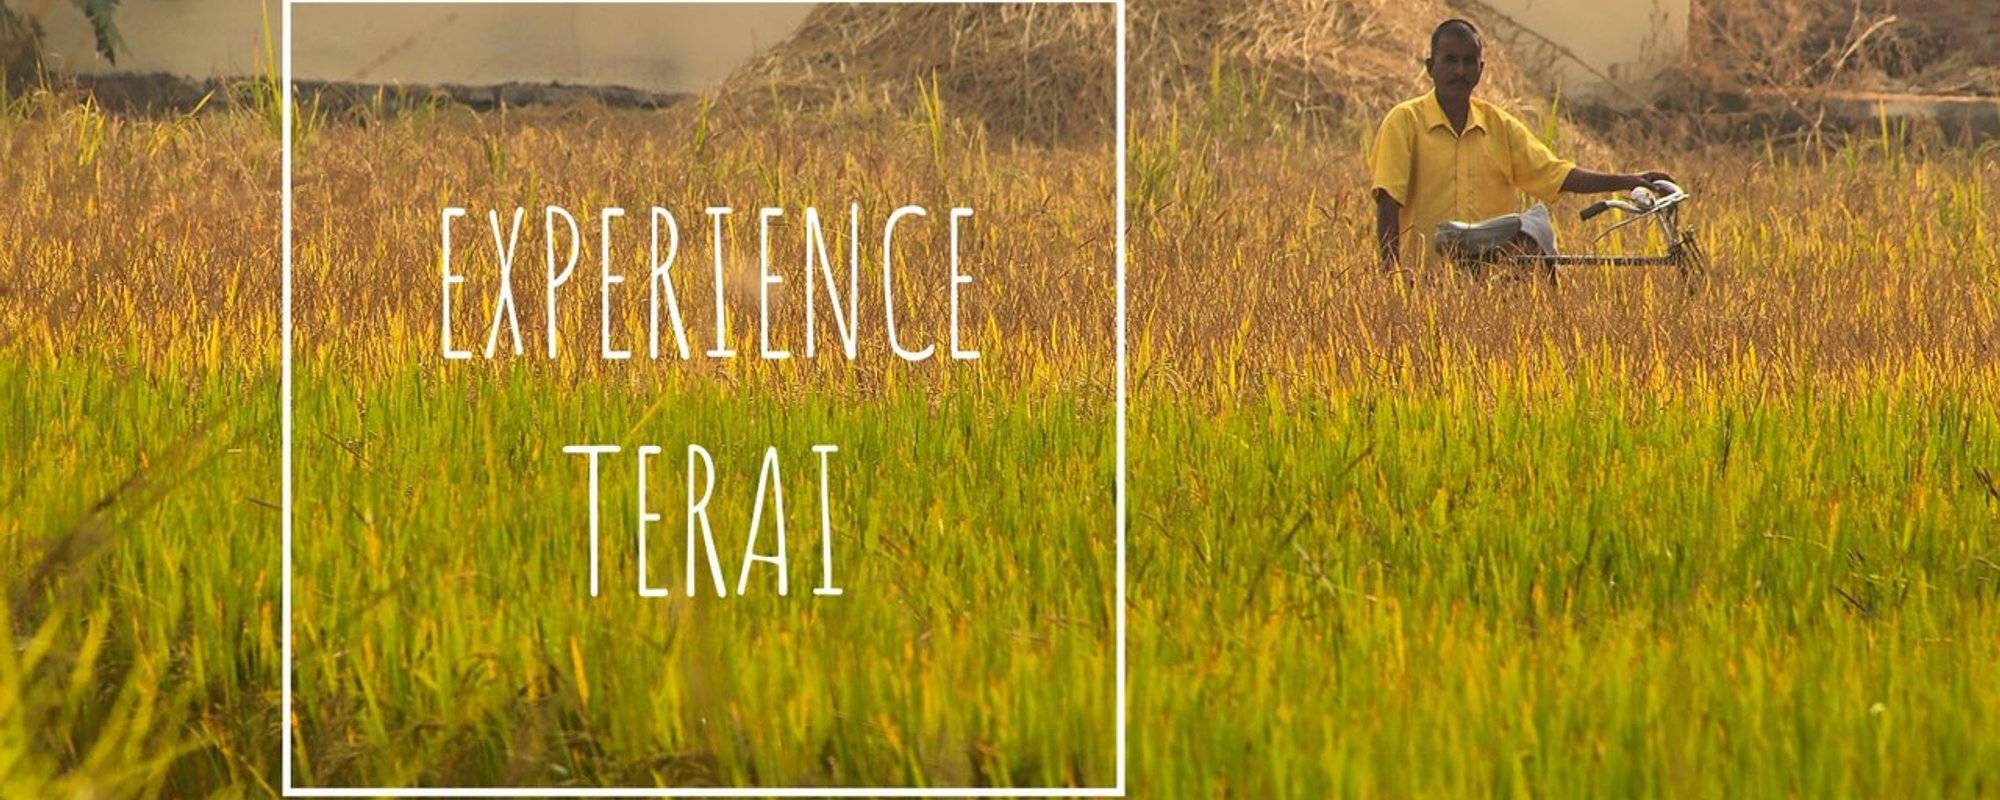 Bhairahawa - Experience Terai